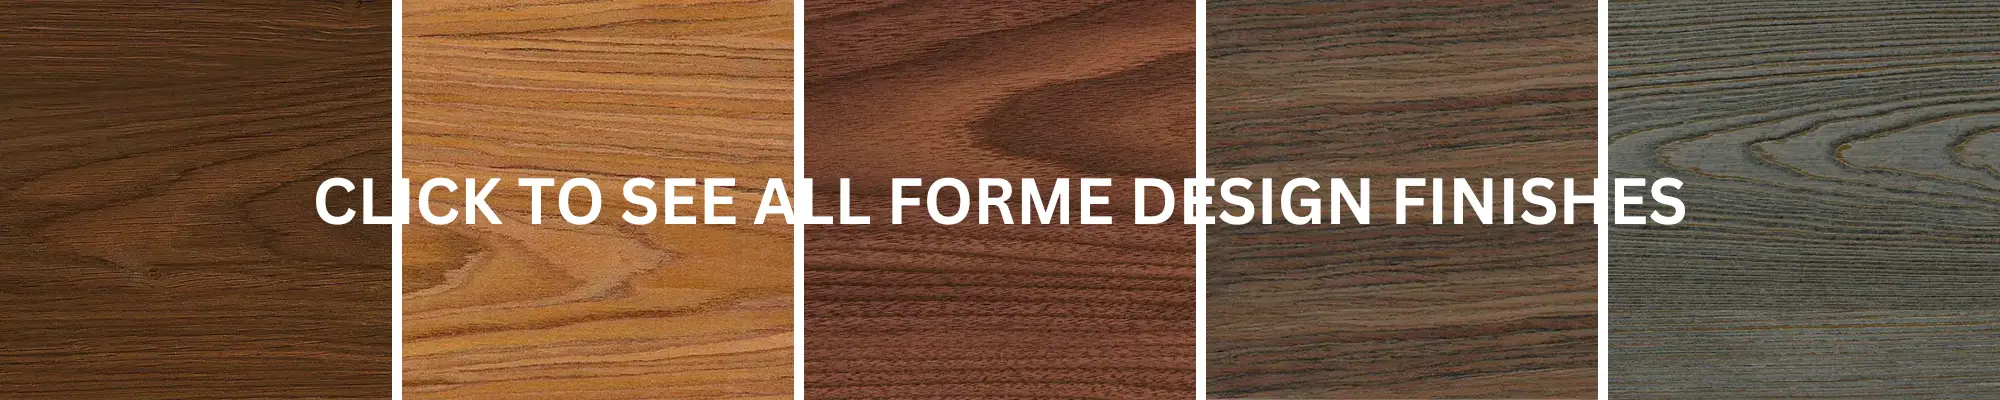 ForMe Design Wood Grain Extruded Aluminum Sample Finishes